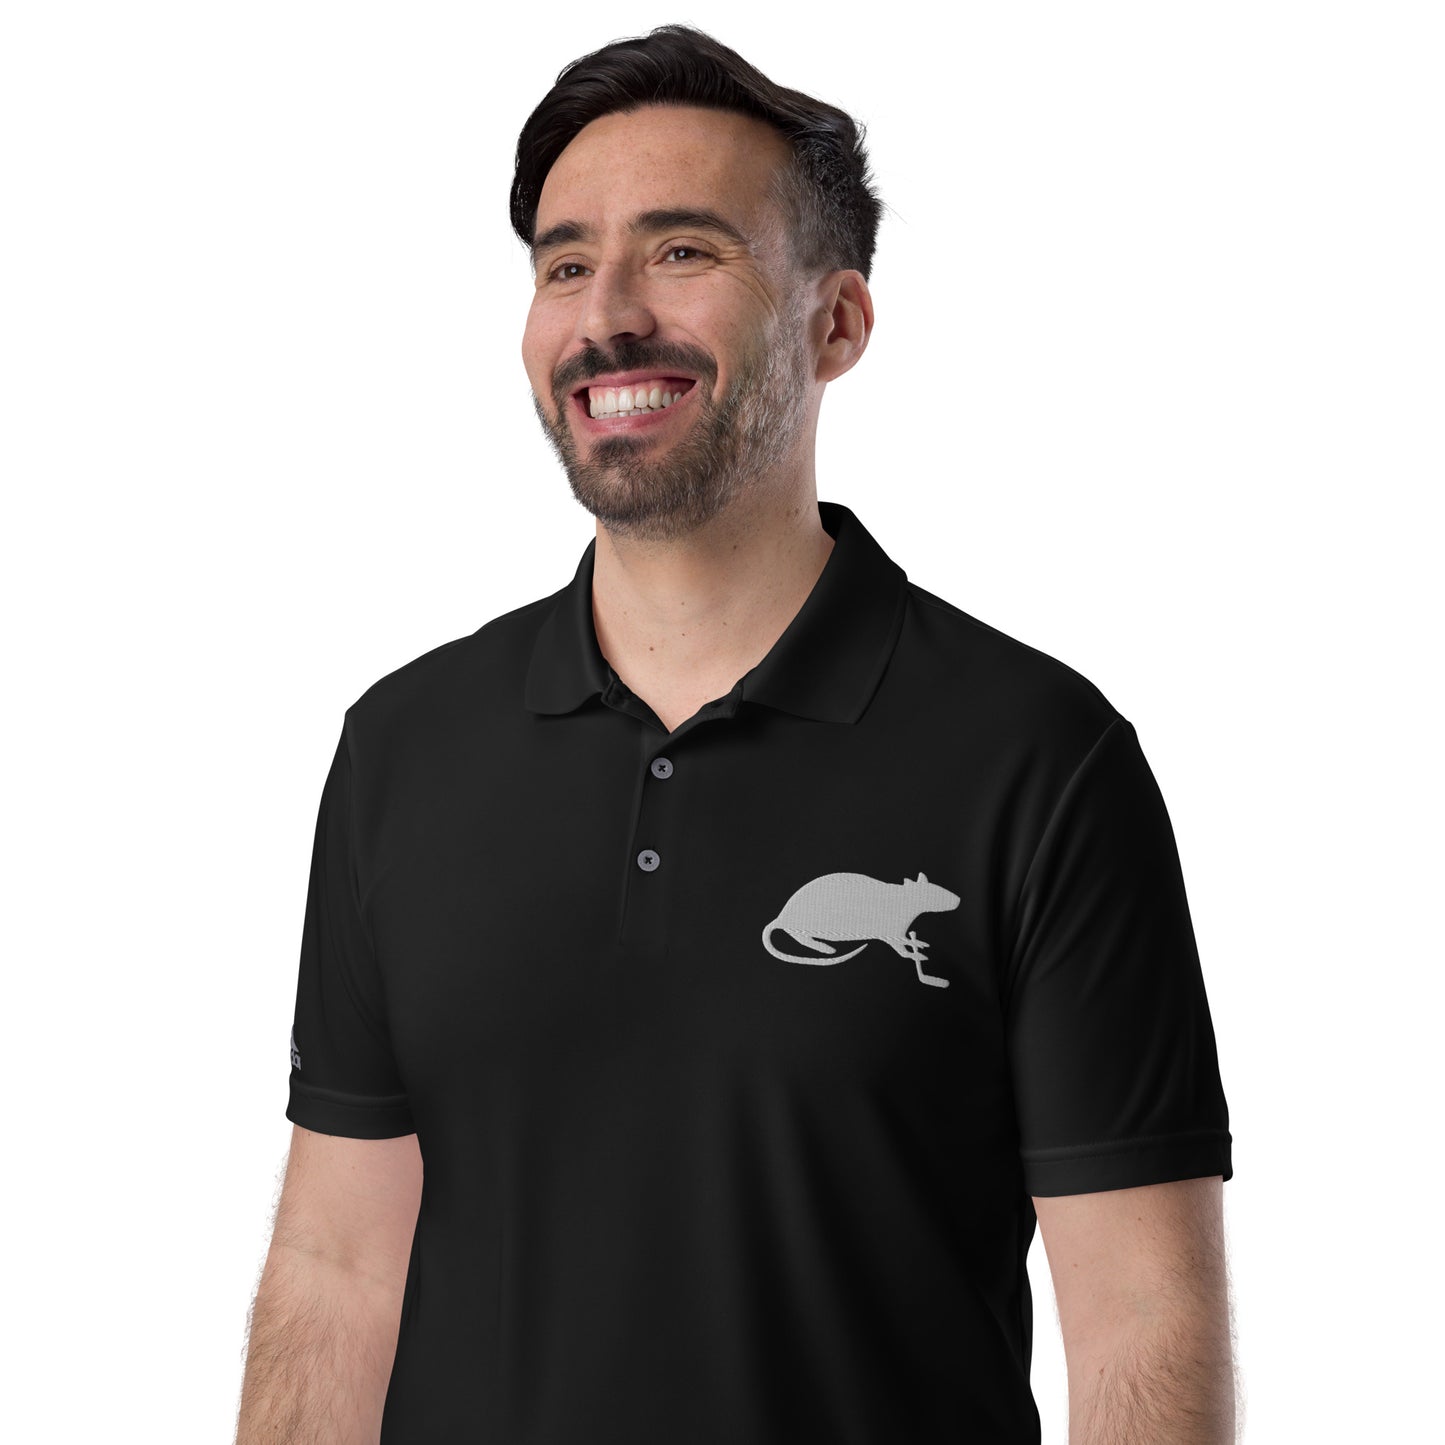 White Stick and Rat River Rat adidas performance polo shirt